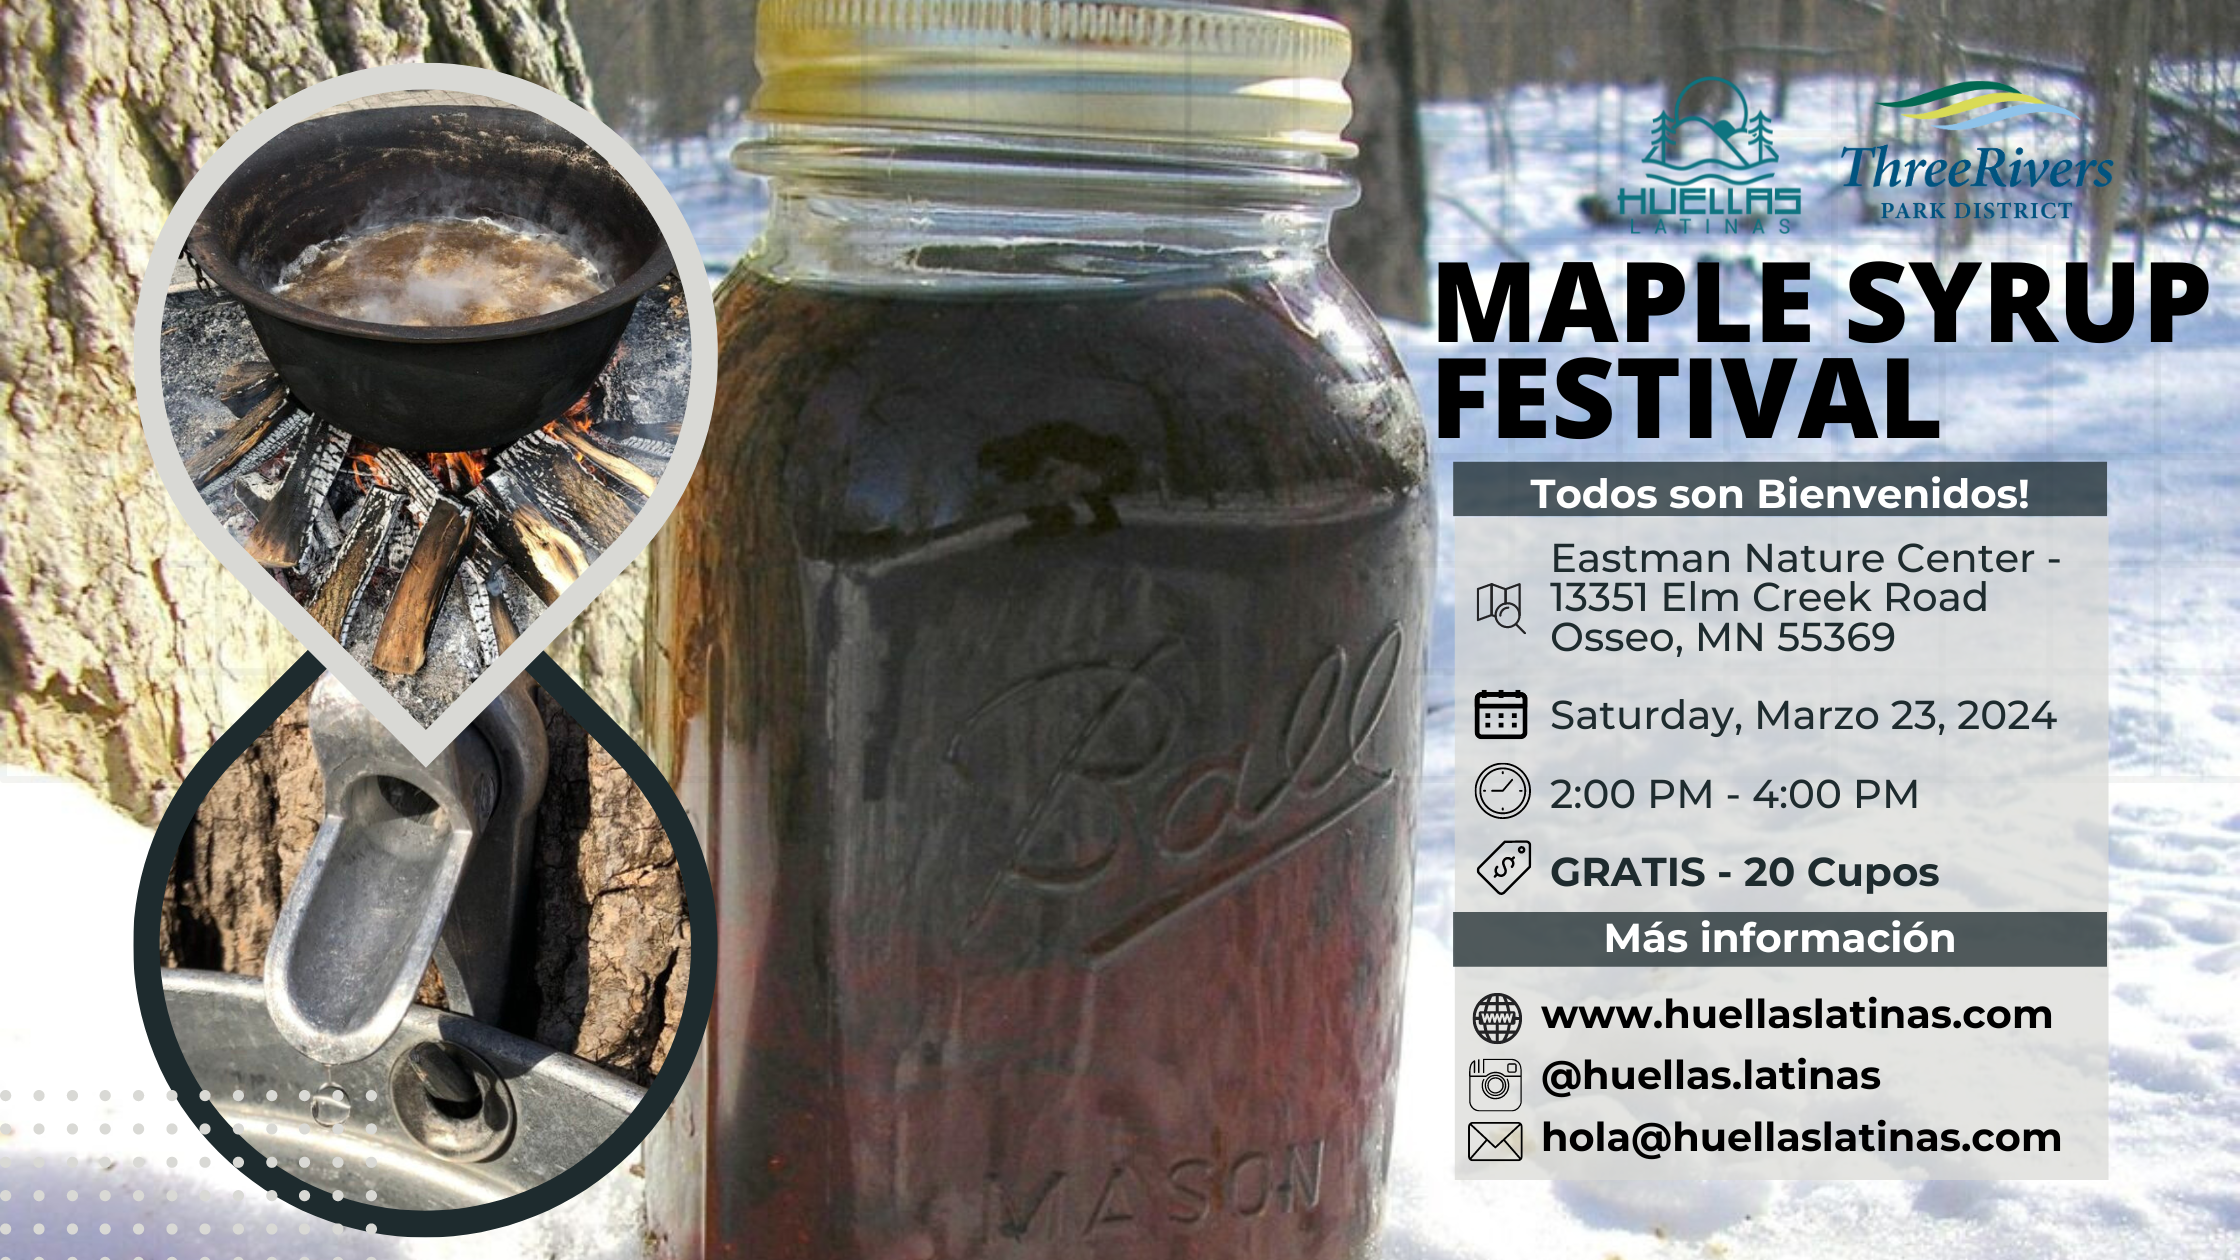 Vamos al Maple Syrup Festival